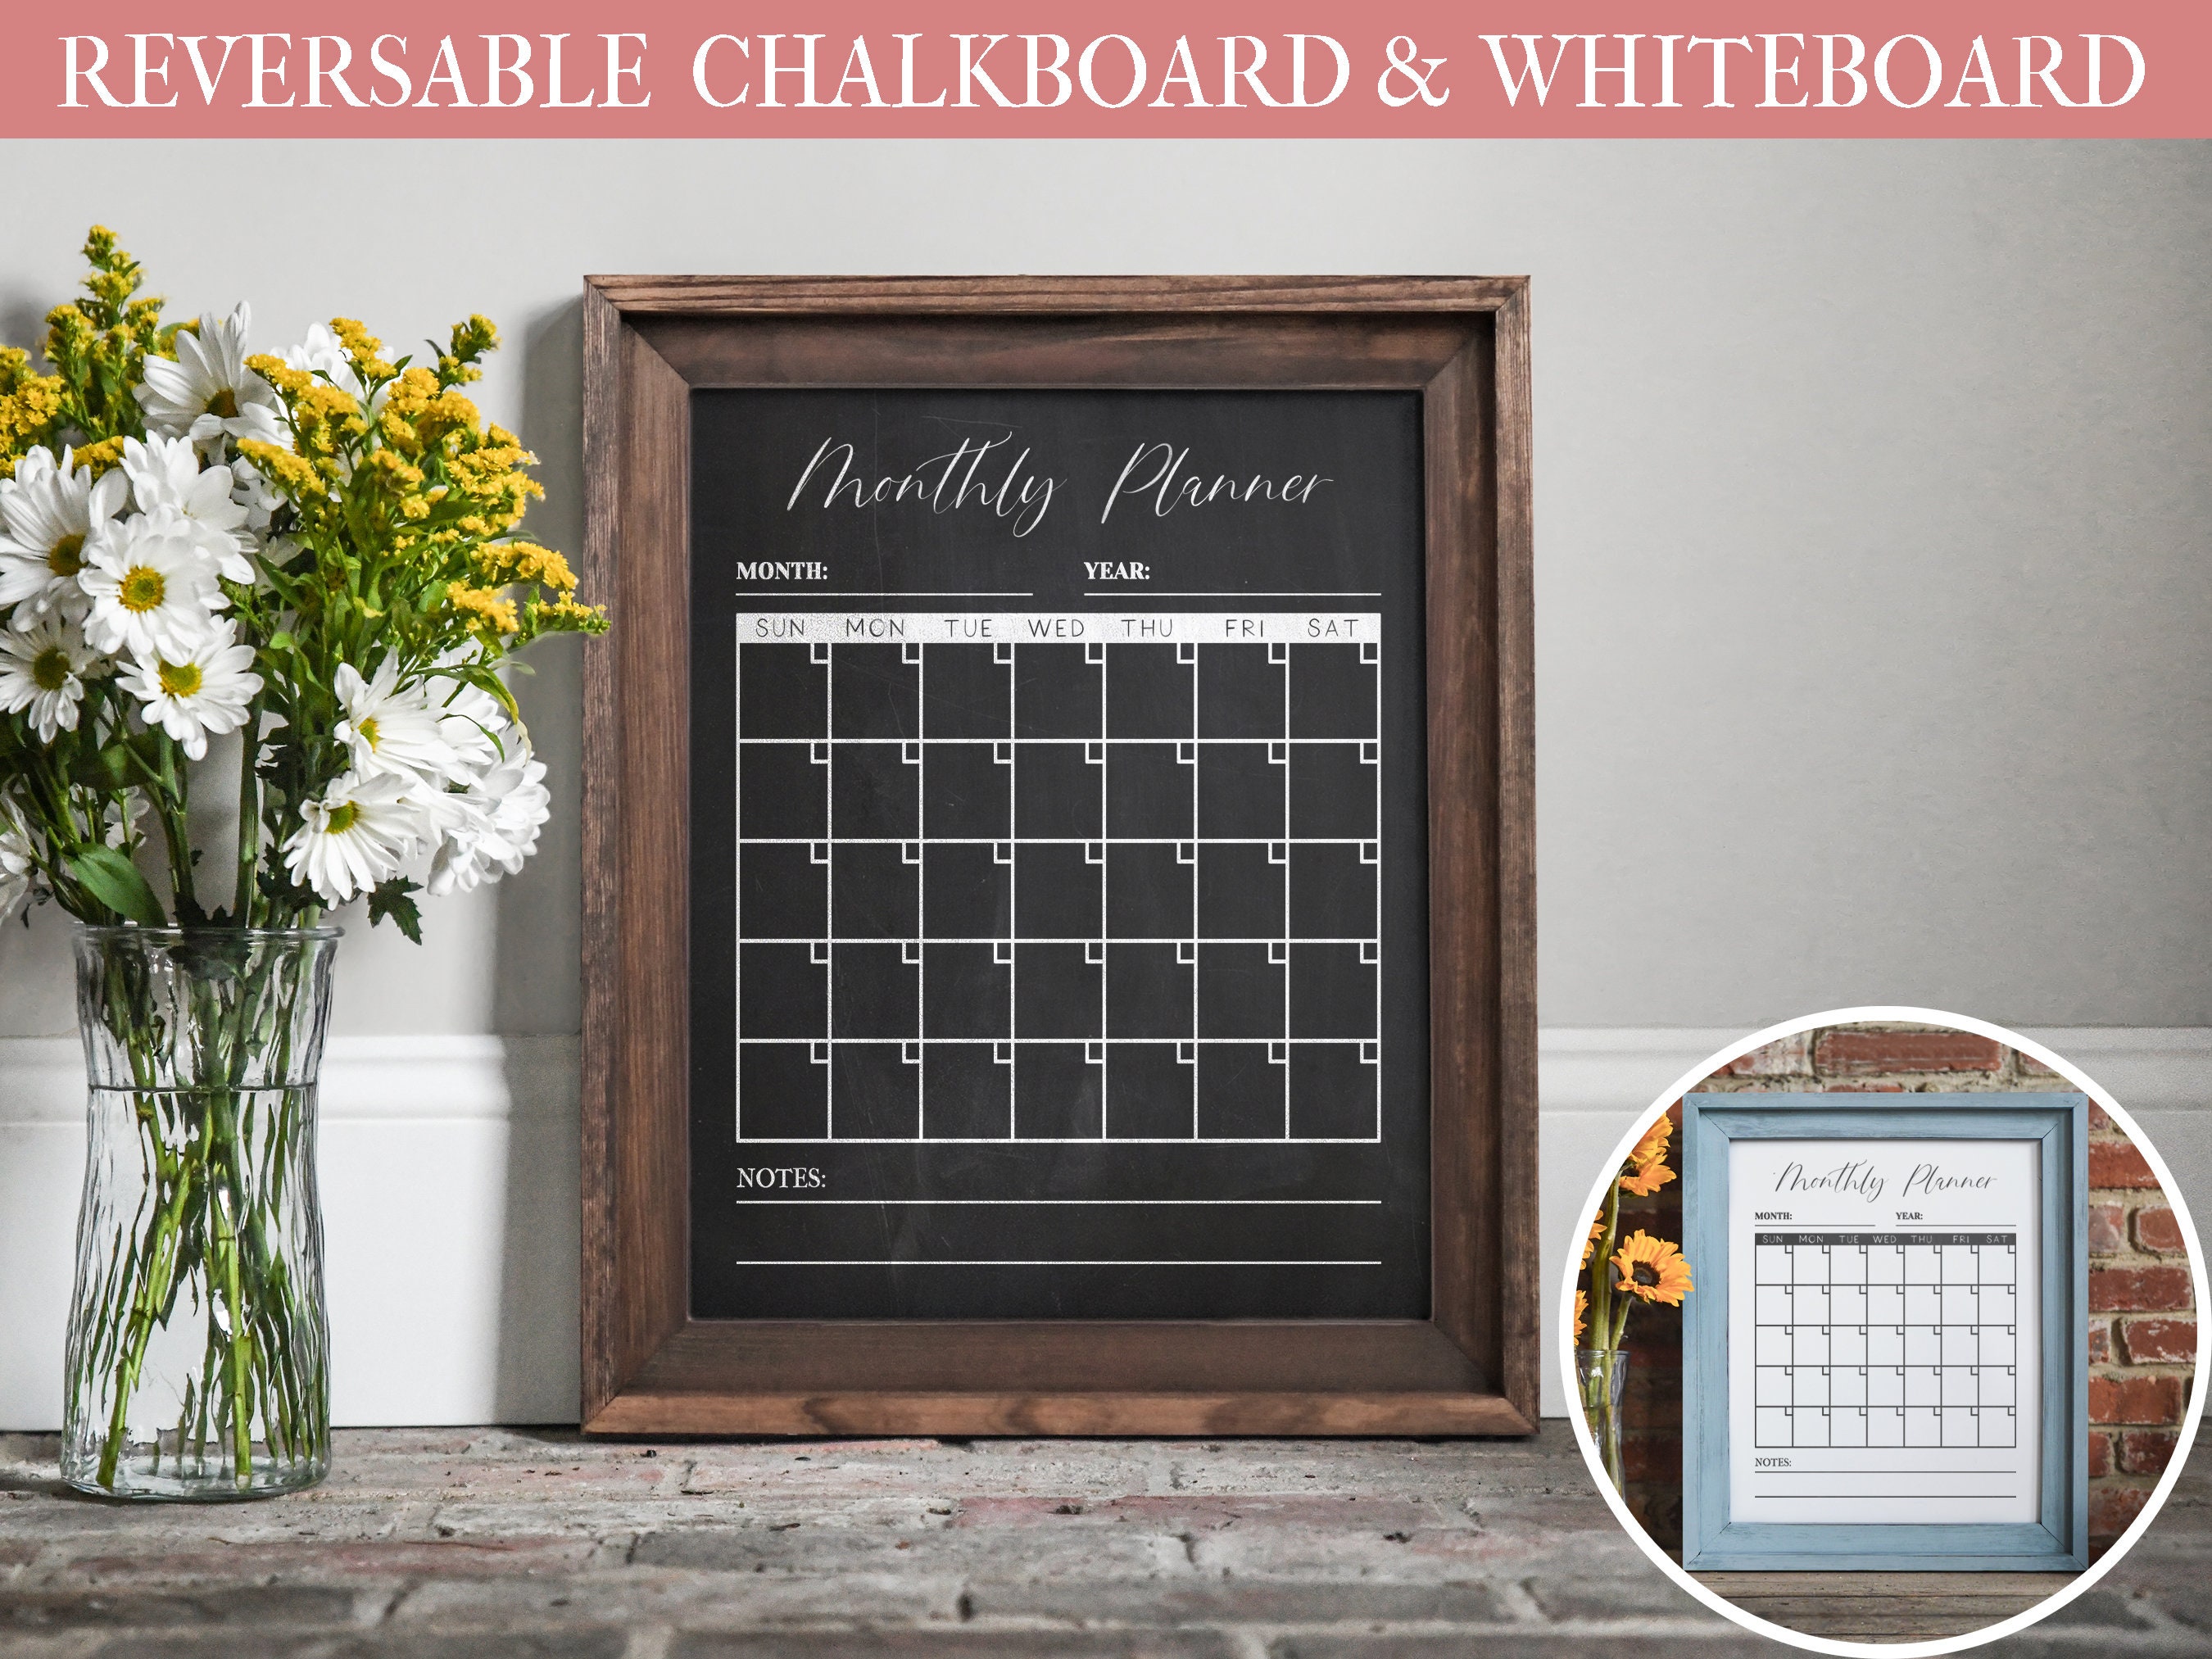 Operitacx 3pcs Chalkboard Weekly Planner Wall Calendar Dry Erase Meal  Planning Chalkboard Blackboard for Wall White Board Calendar Chalk Board